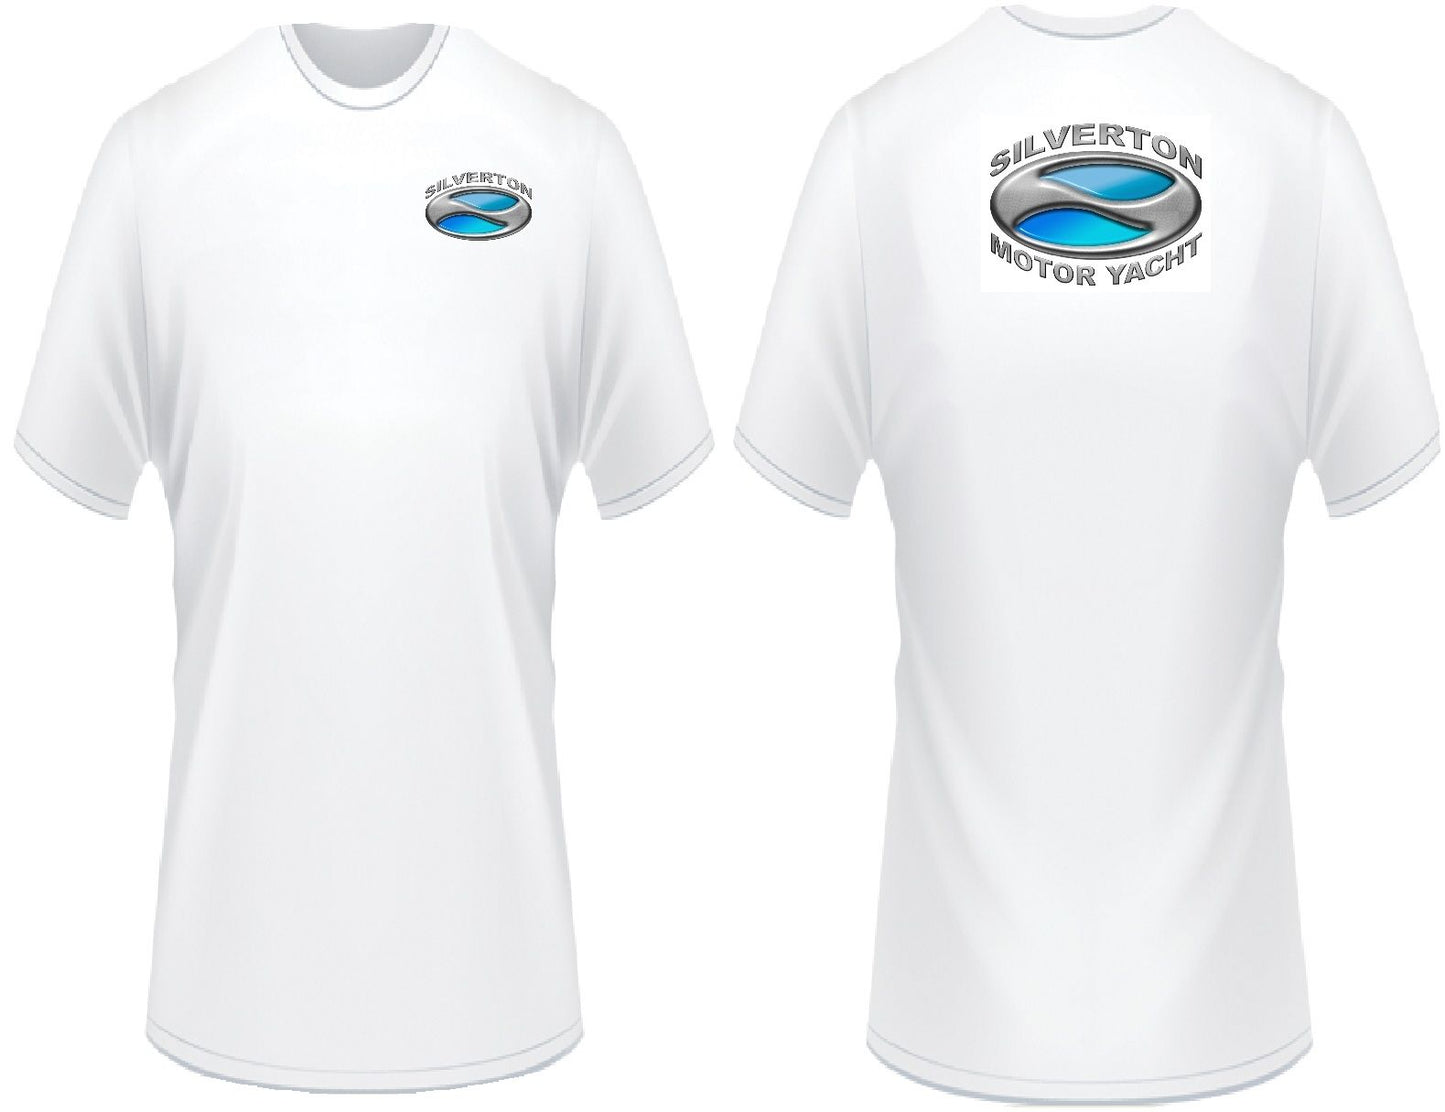 Silverton Yachts T-Shirt